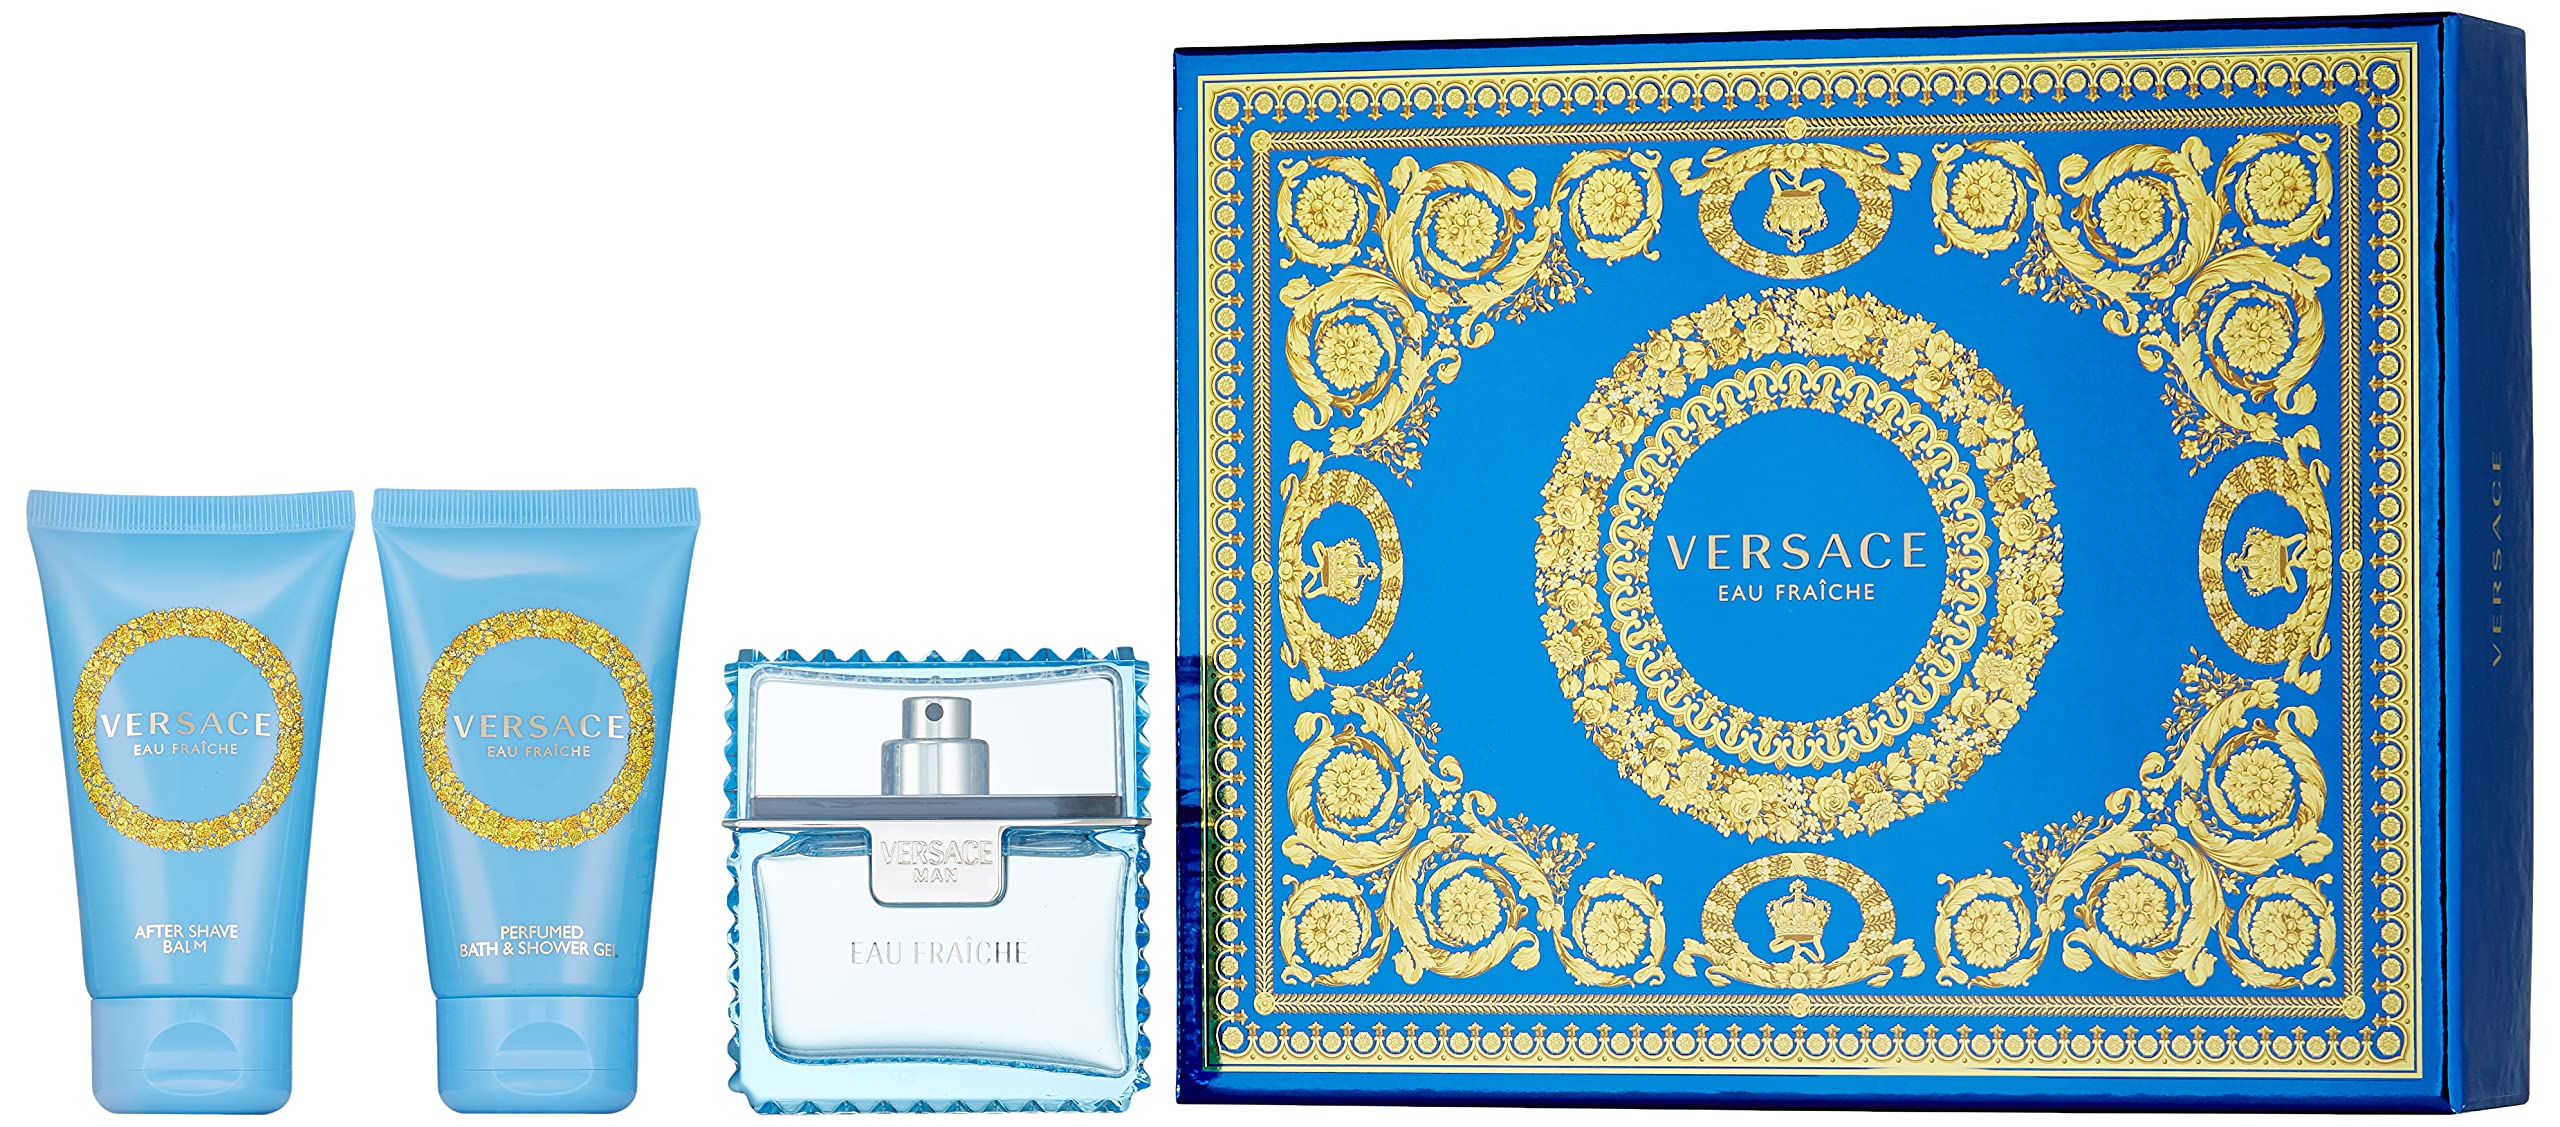 Versace Man Eau Fraiche Gift Set by Versace for Men